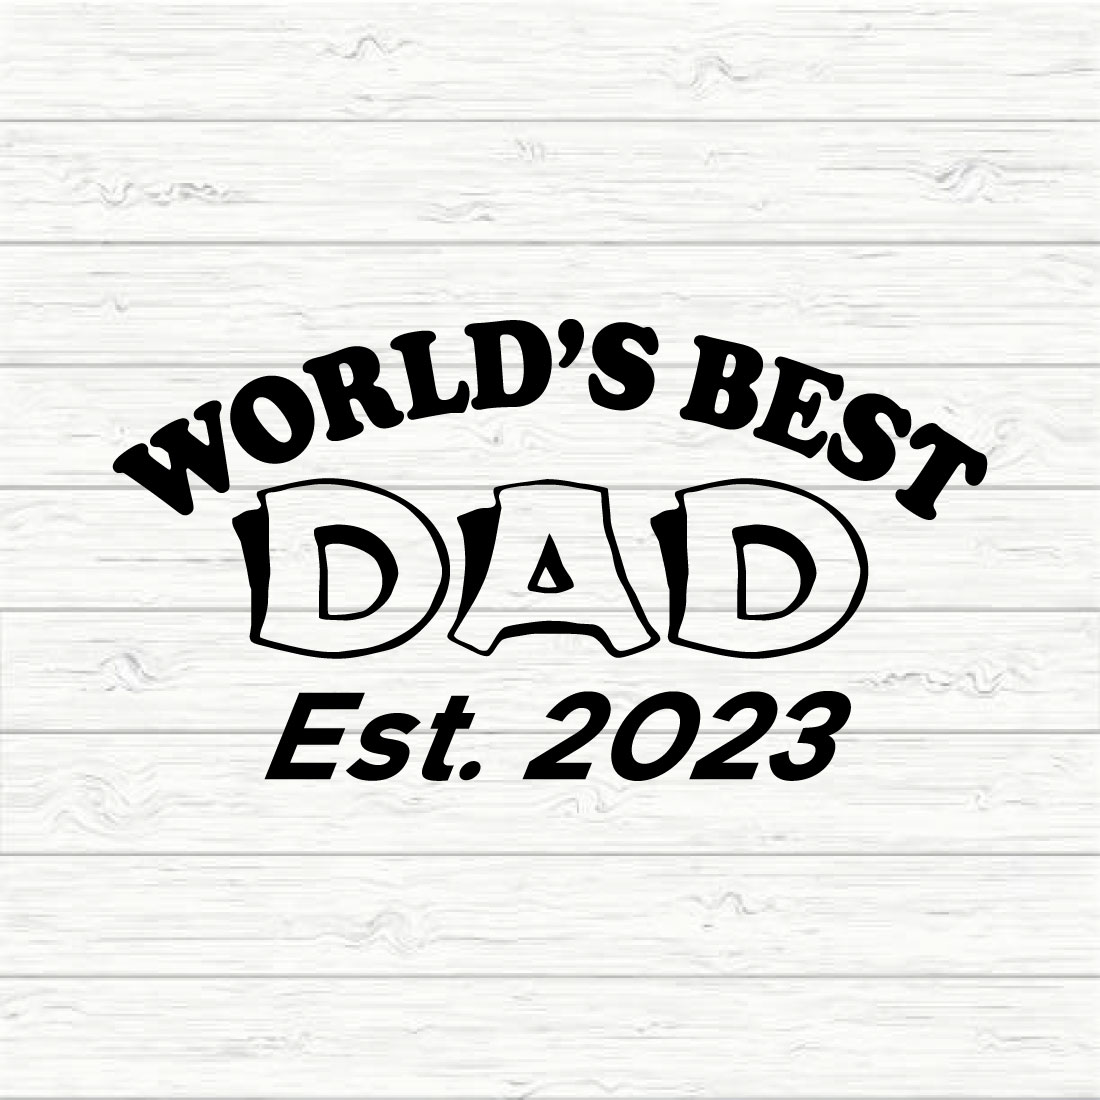 World's Best Dad Est 2023 preview image.